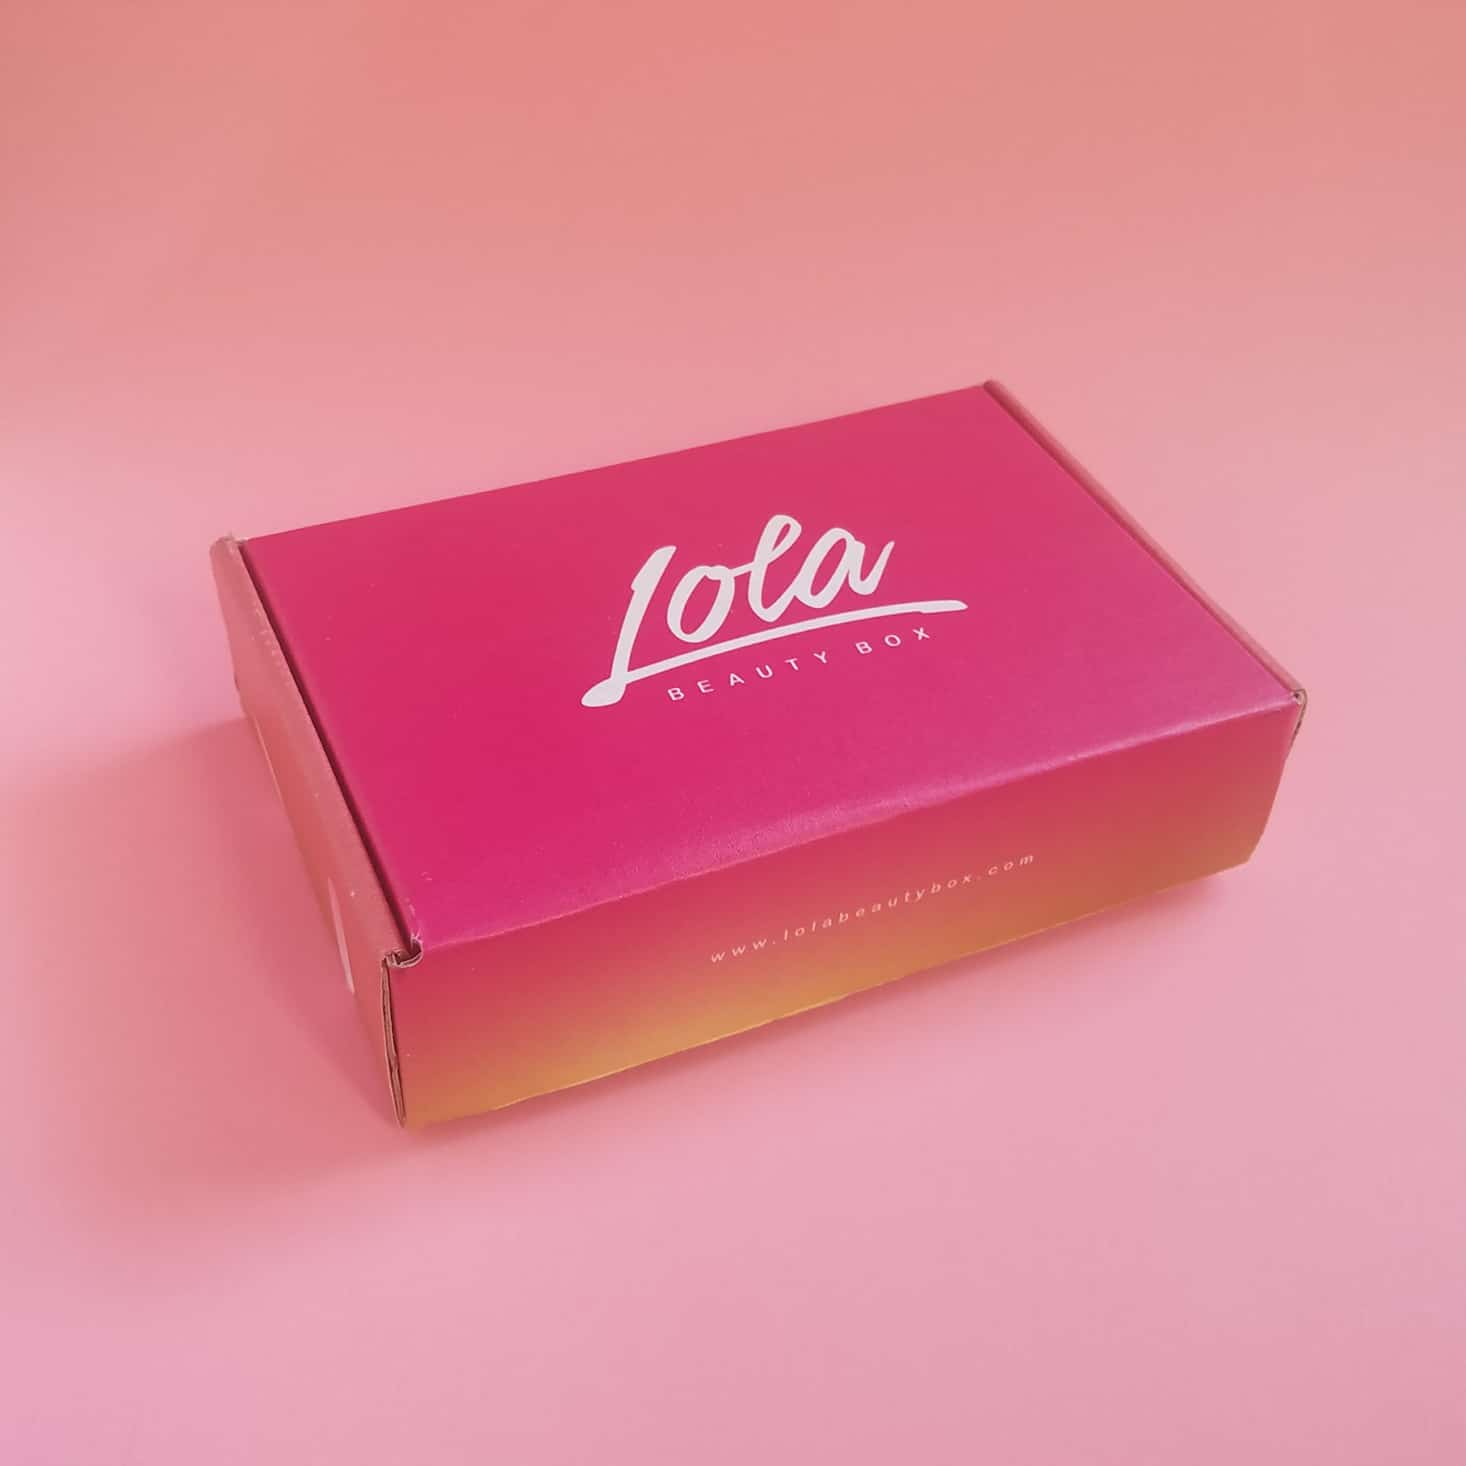 Lola Beauty Box Subscription Review + Coupon – June 2017